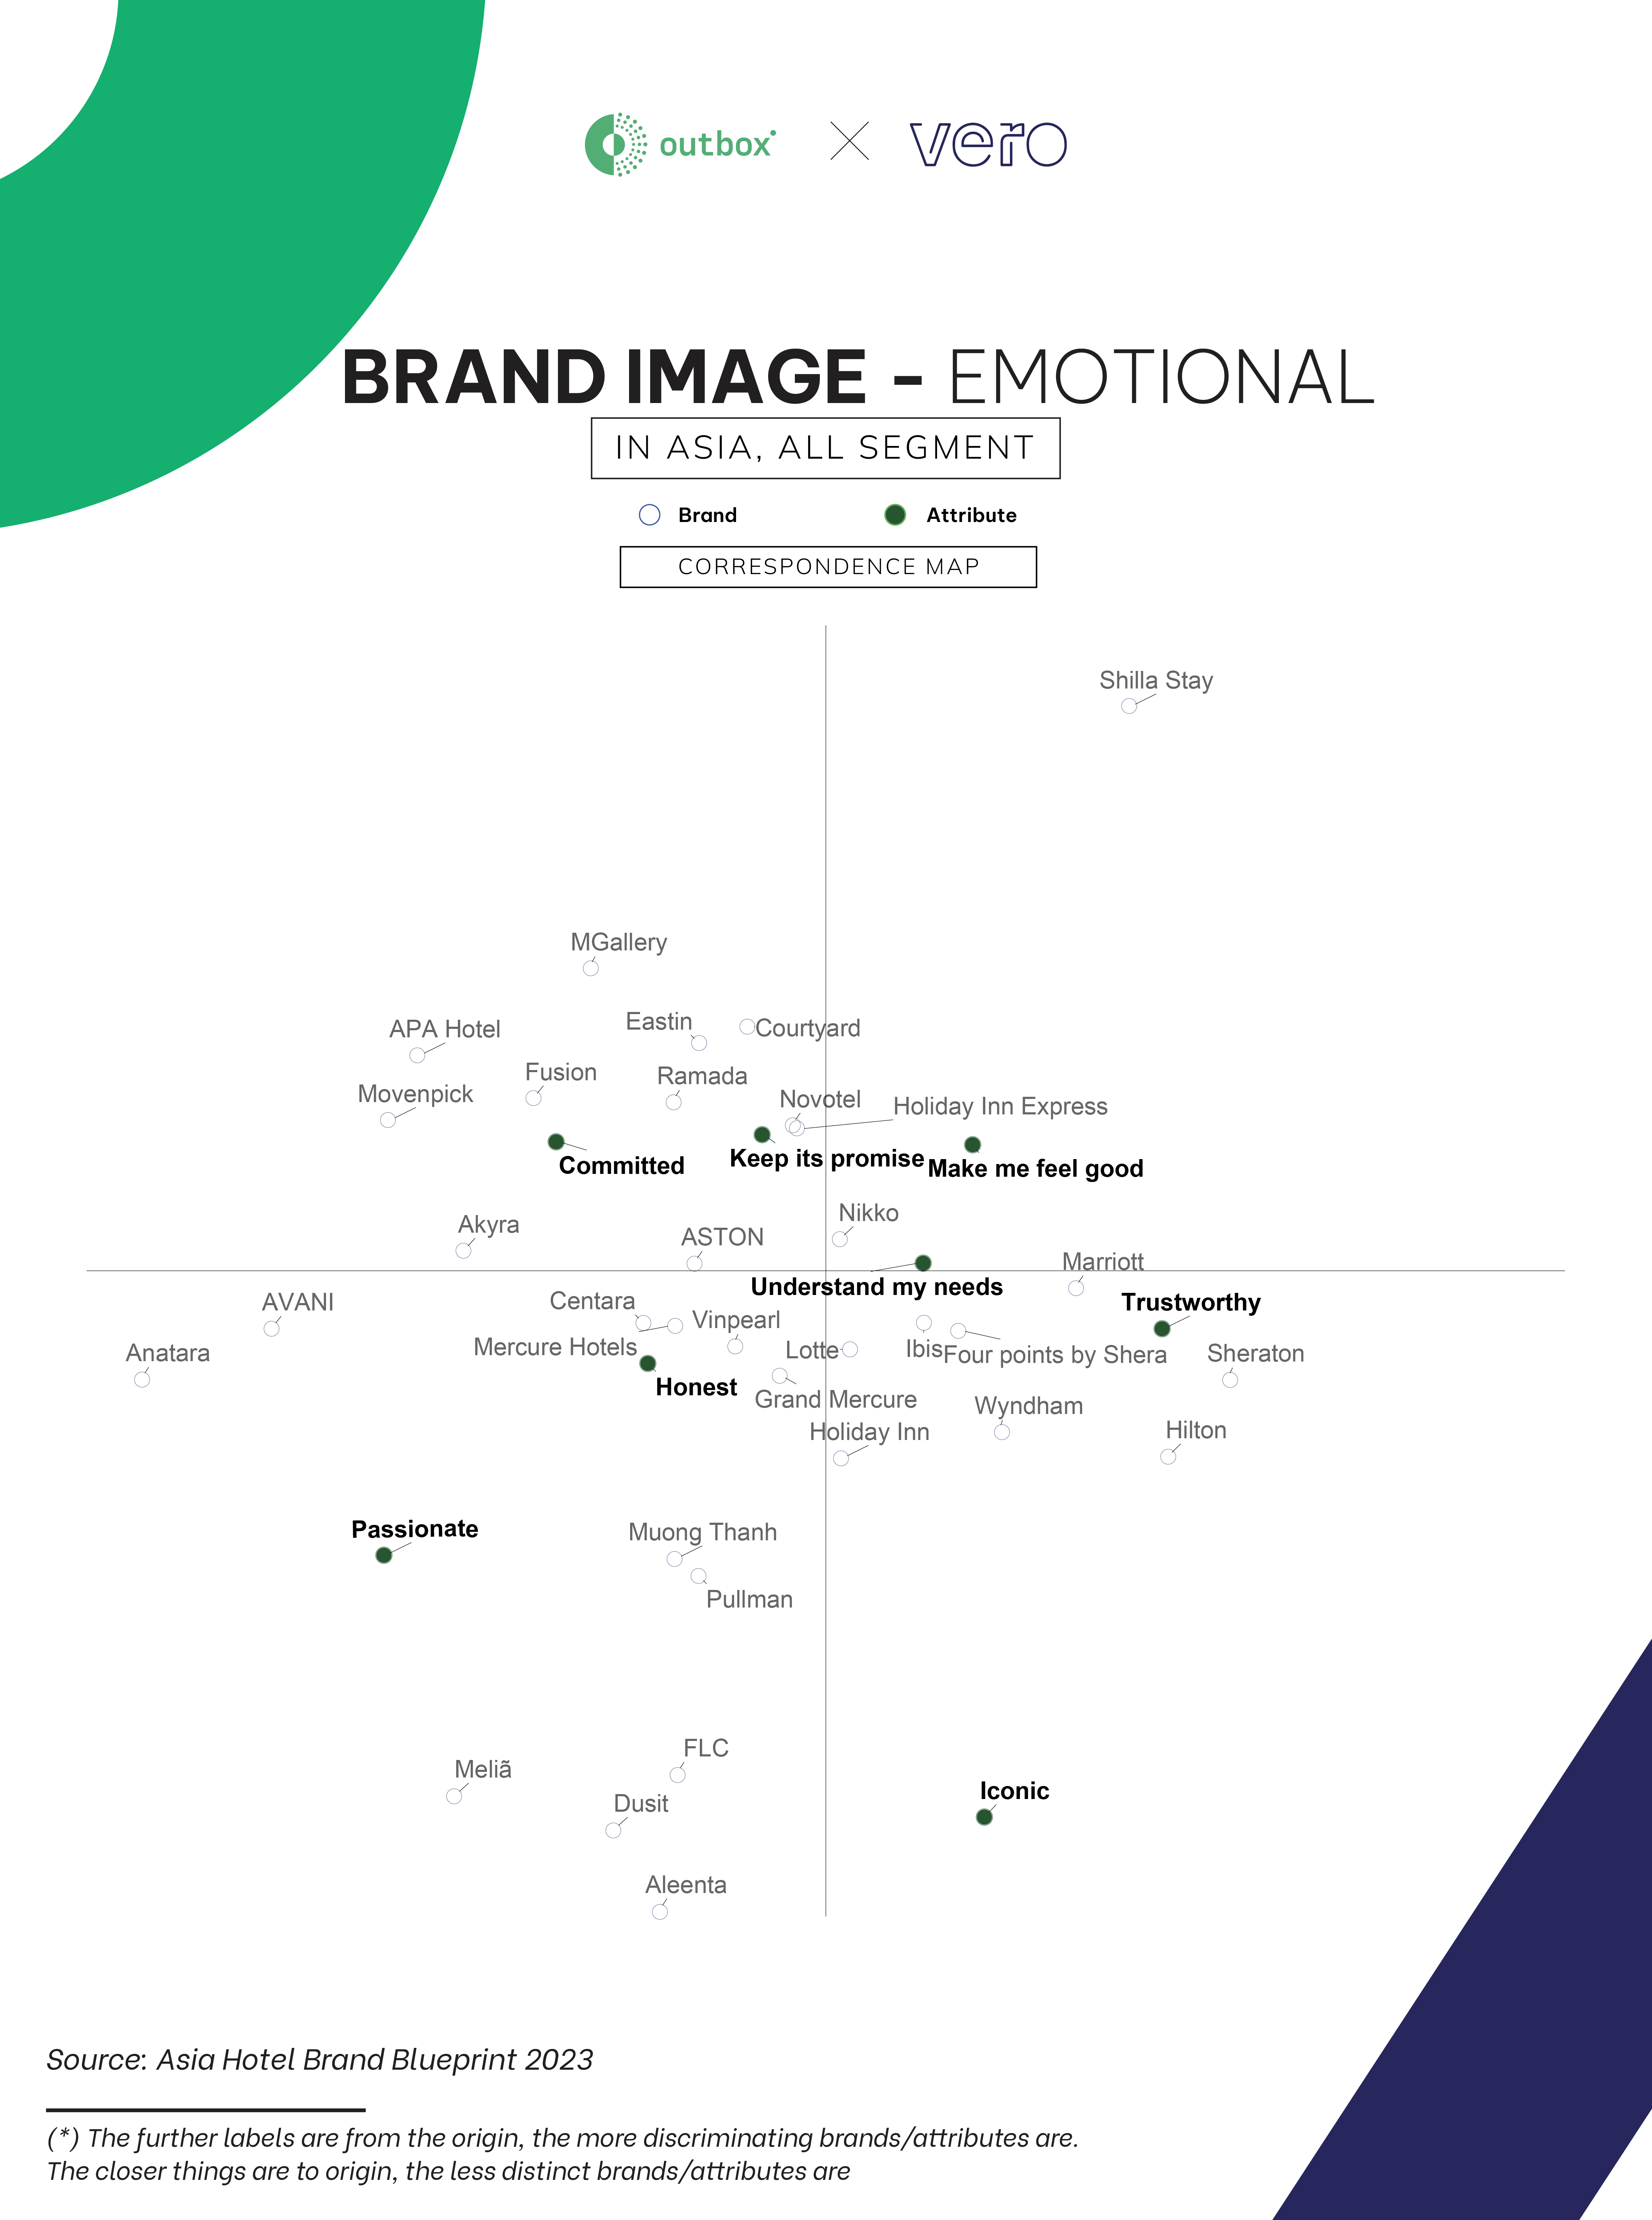 Brand Image - Emotional